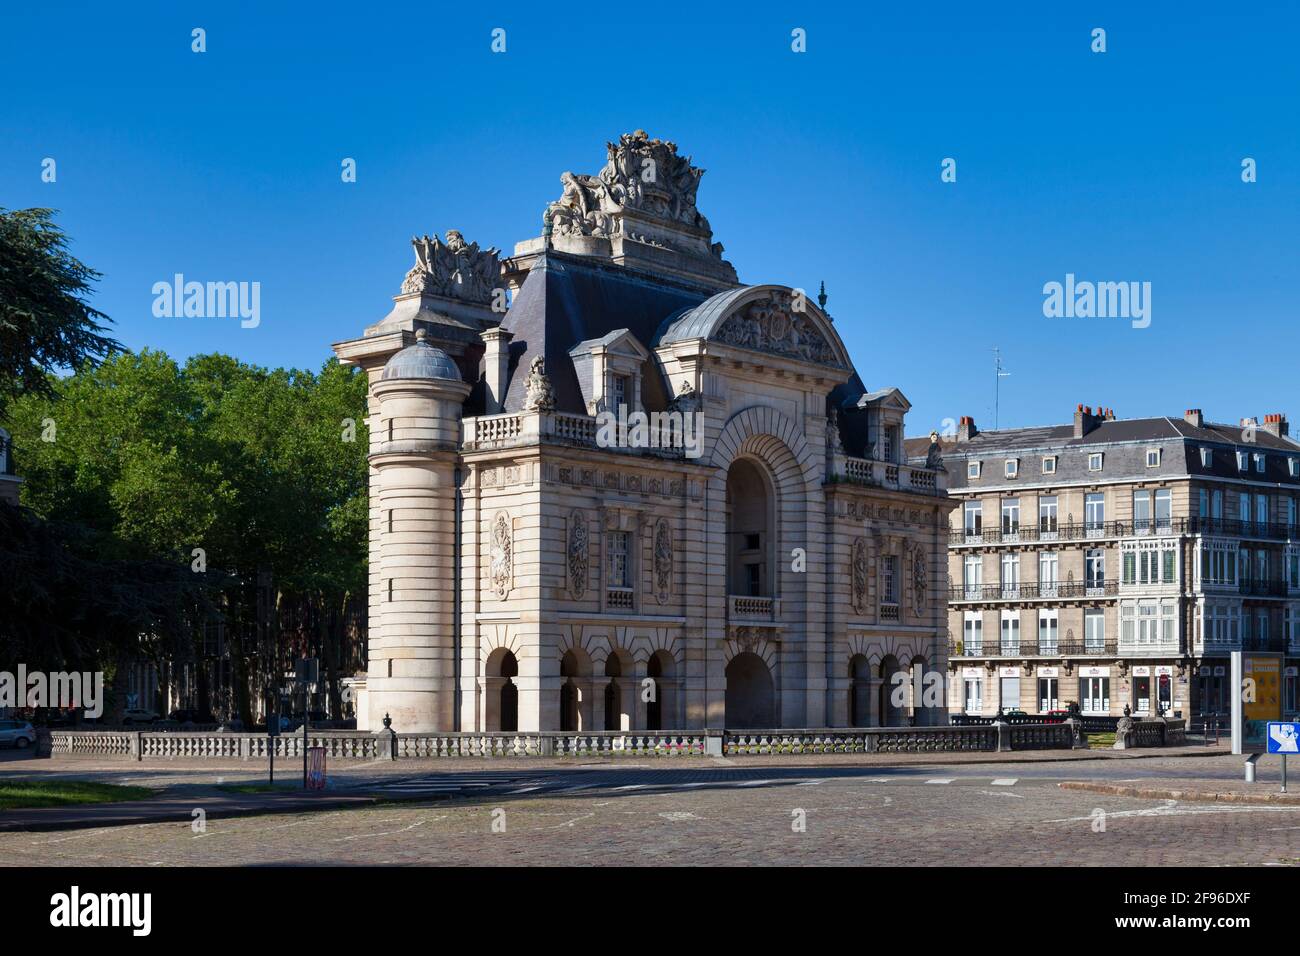 Porte de paris hi-res stock photography and images - Alamy